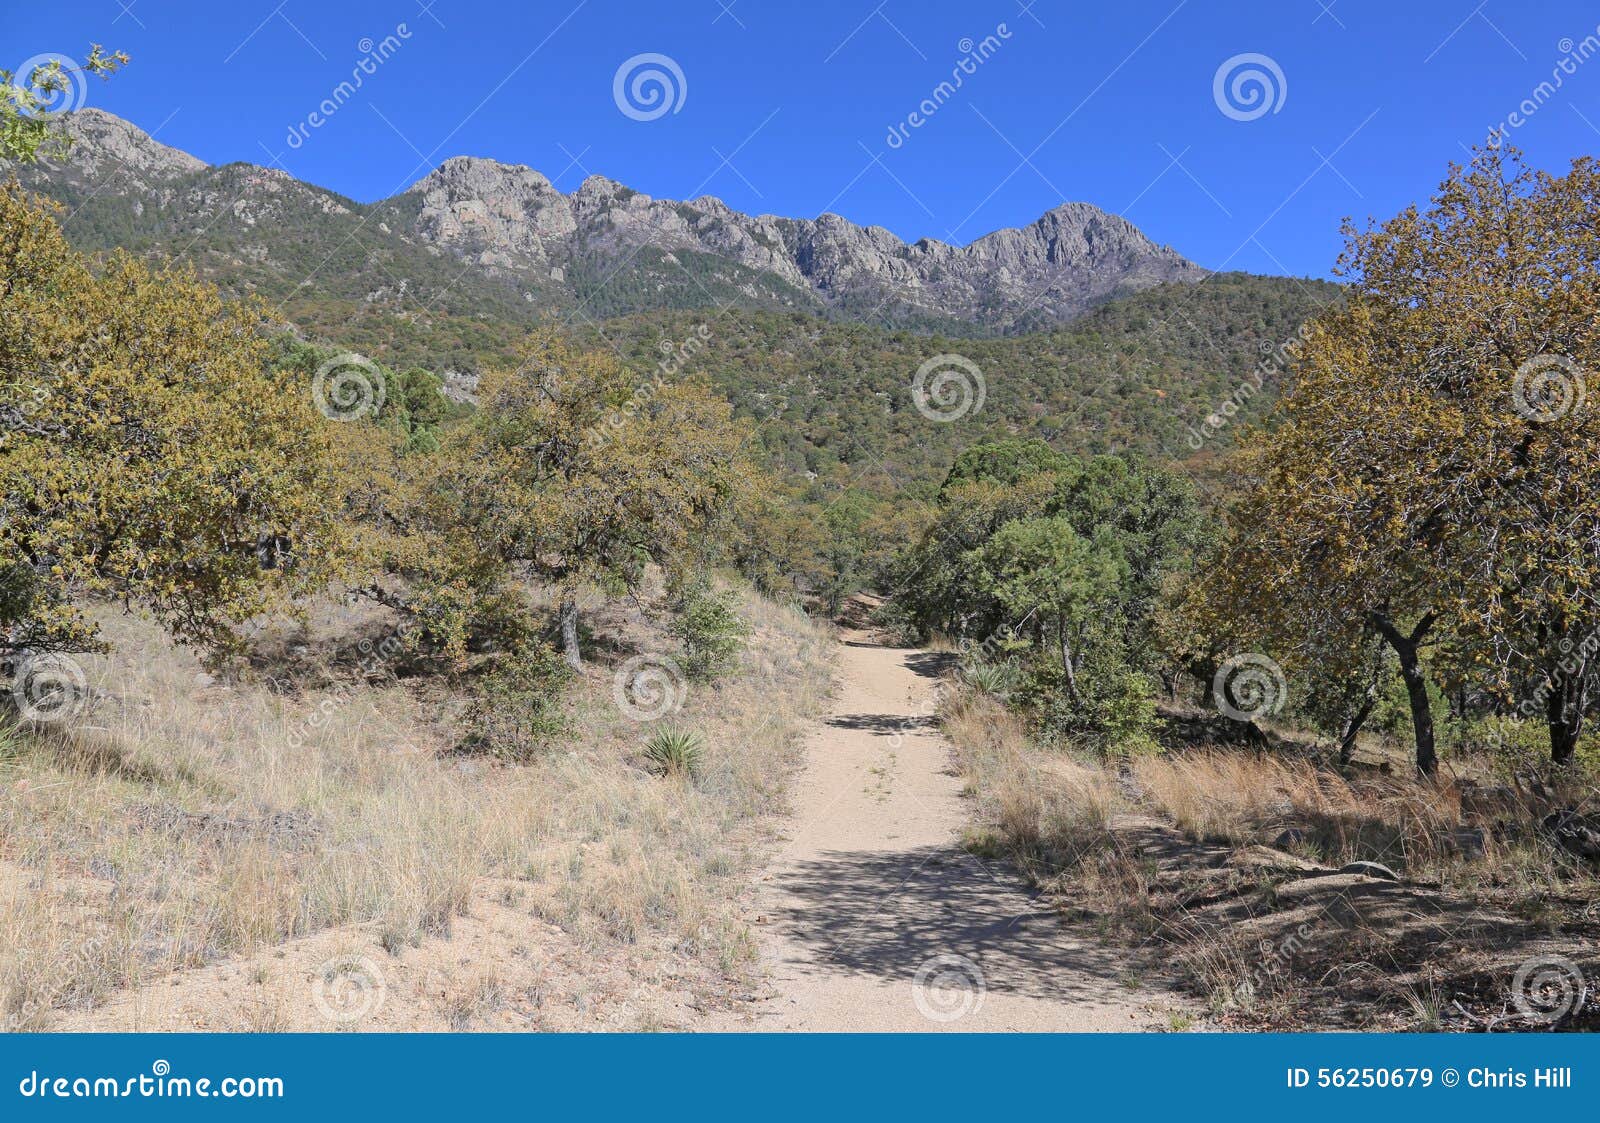 madera canyon trail